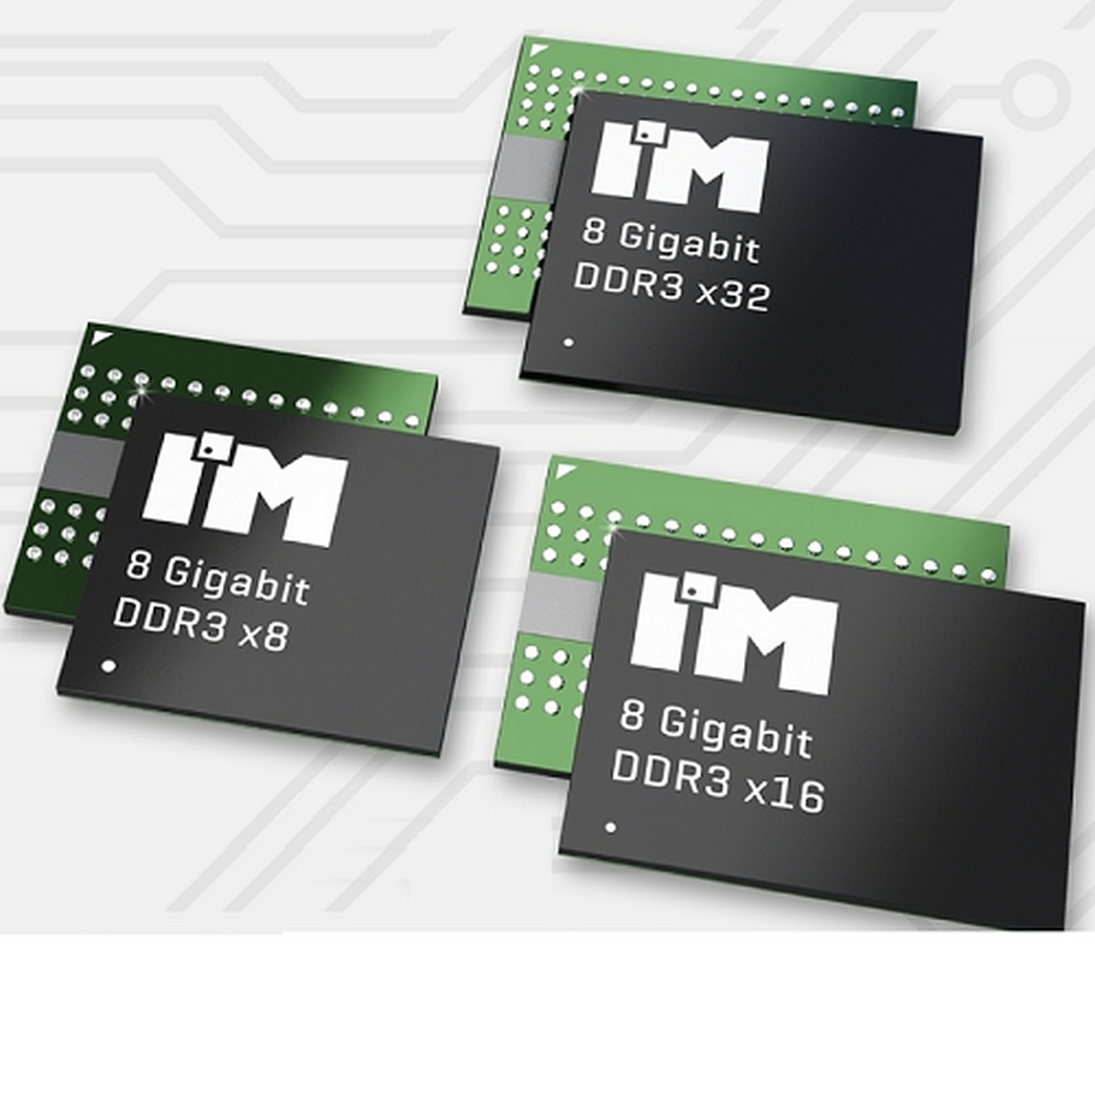 Intelligent memory DDR3 8 Gb